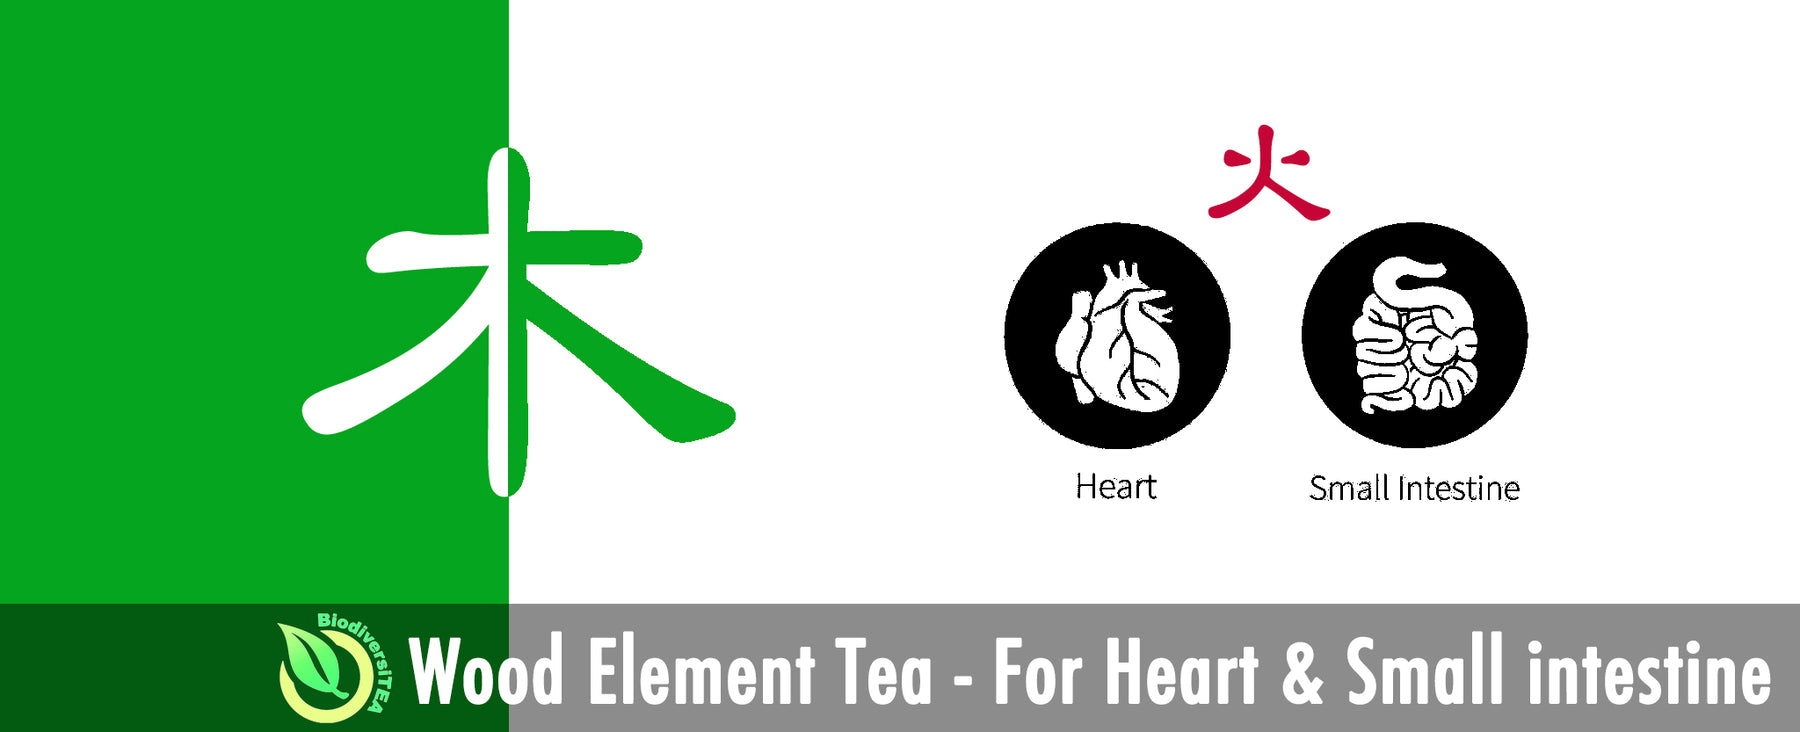 Wood Element Tea - For Heart & Small Intestine